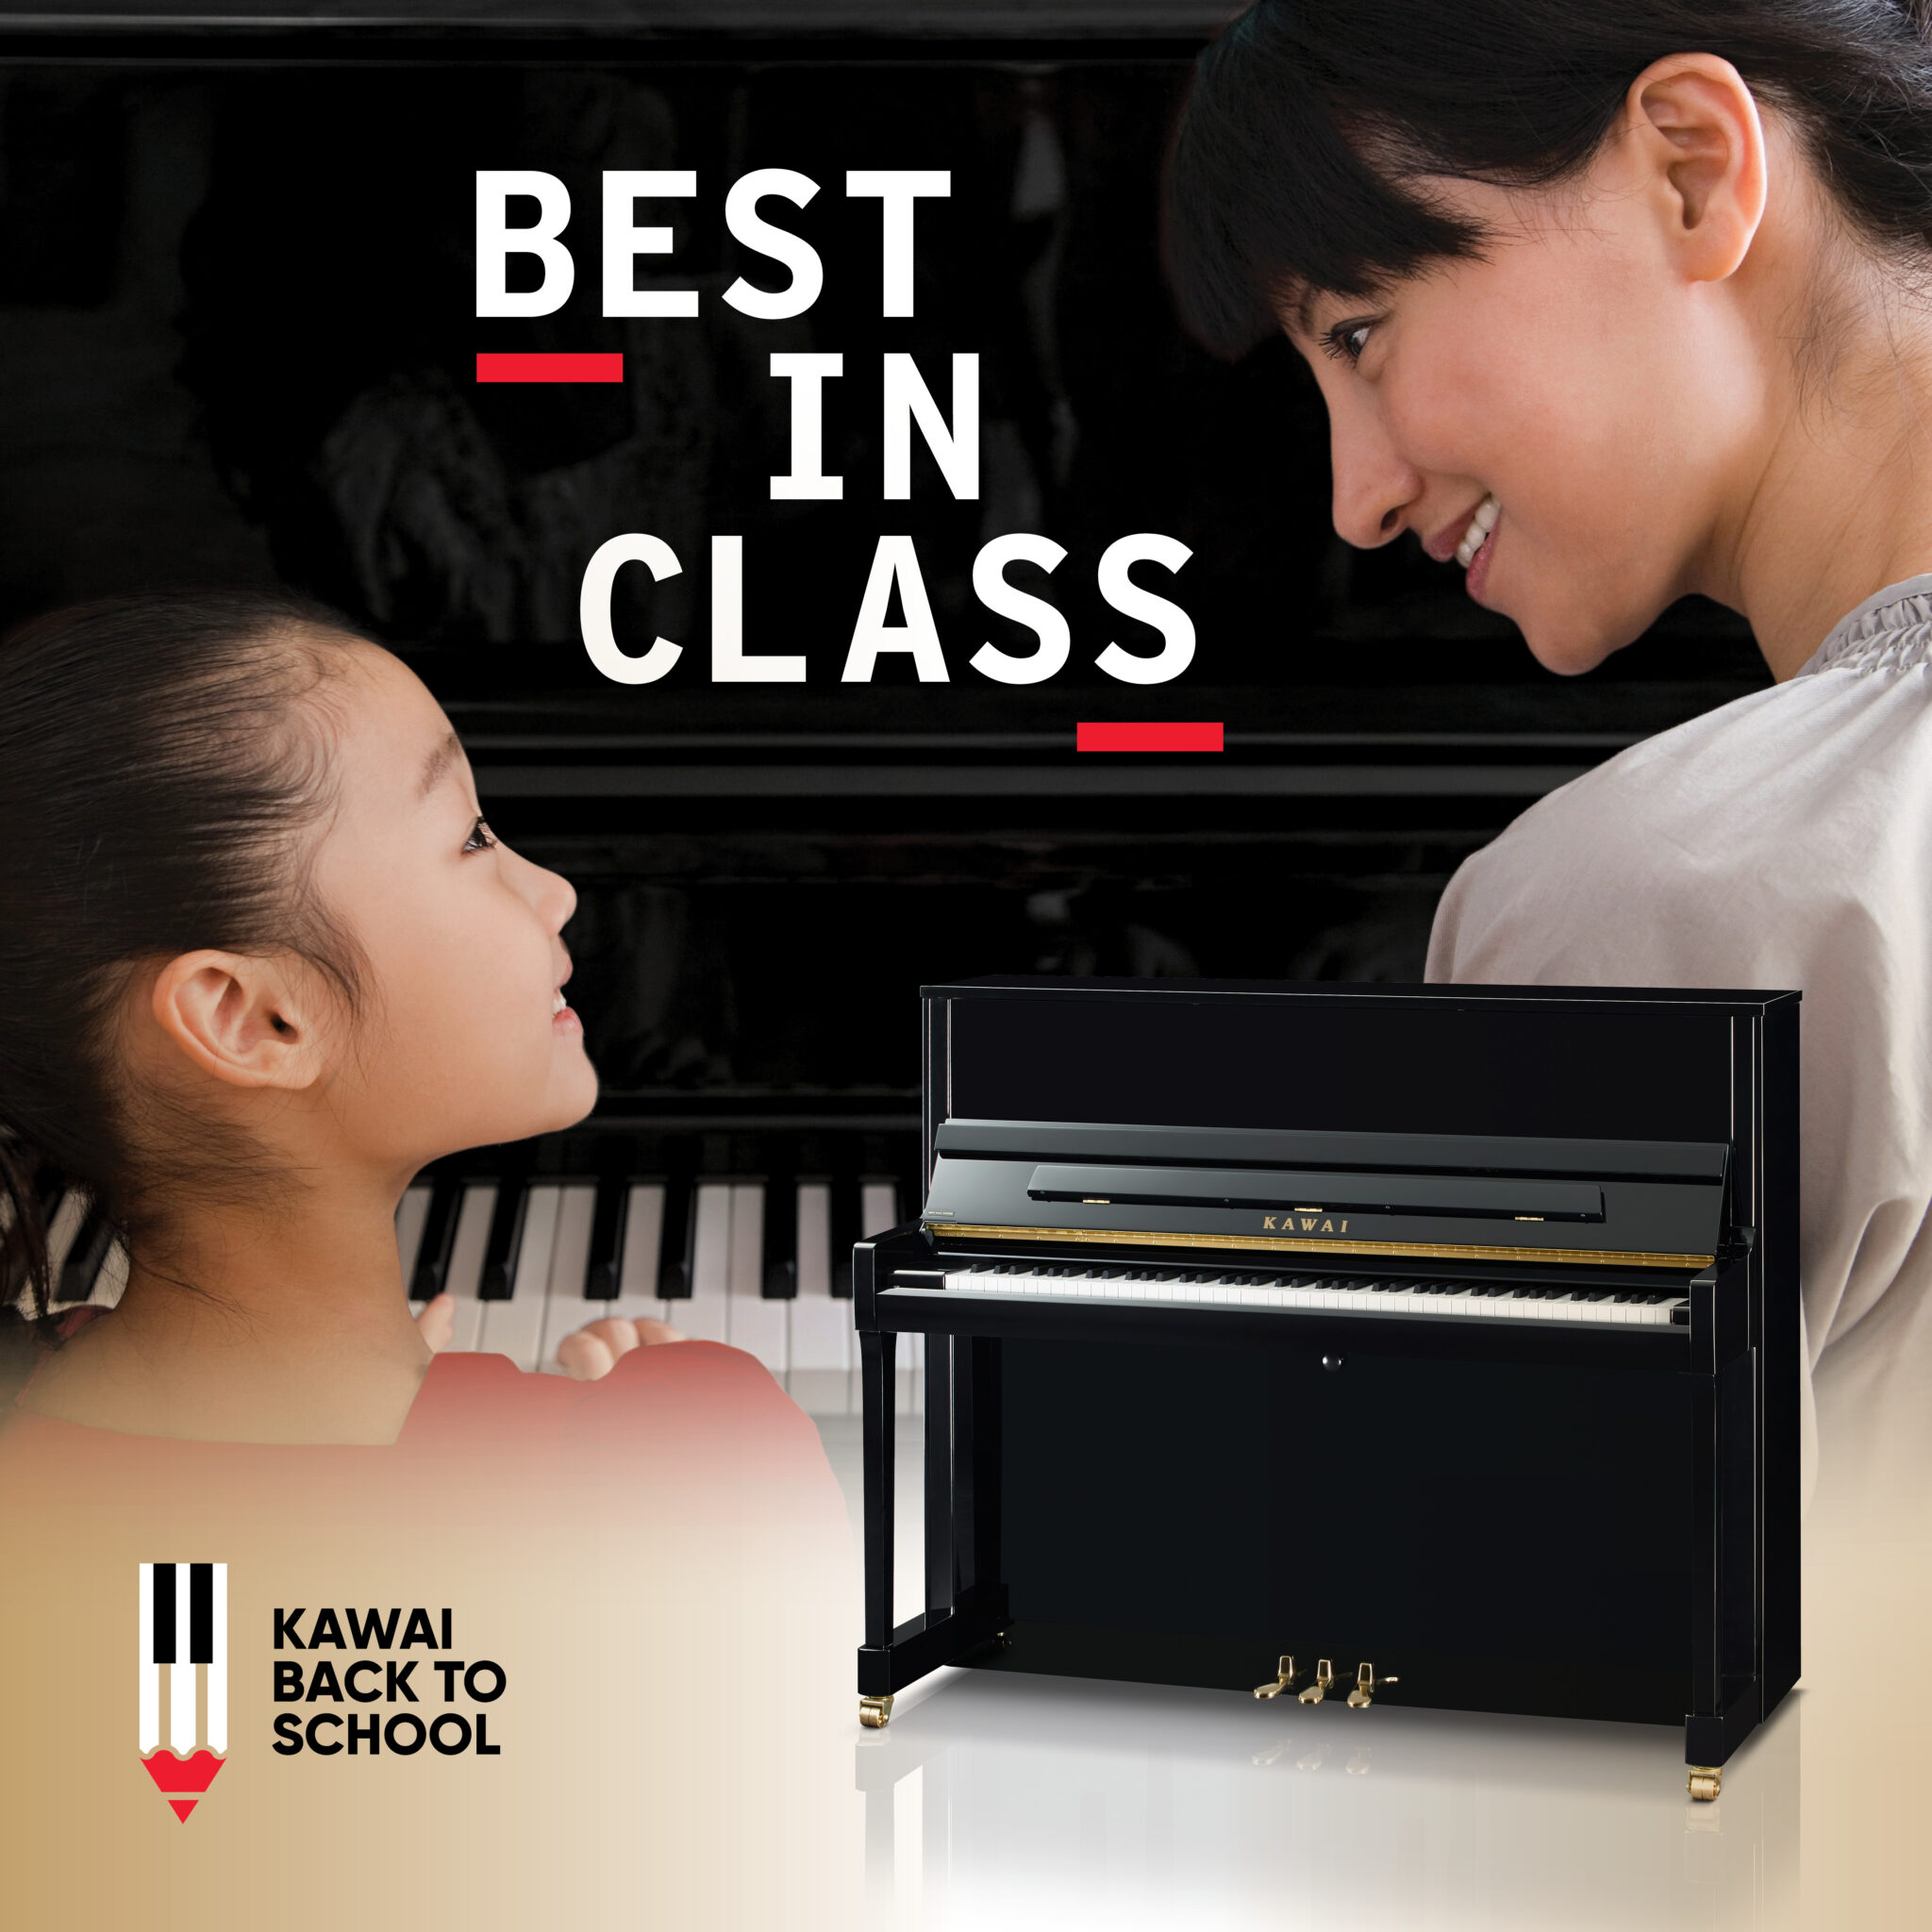 Kawai K300 upright piano